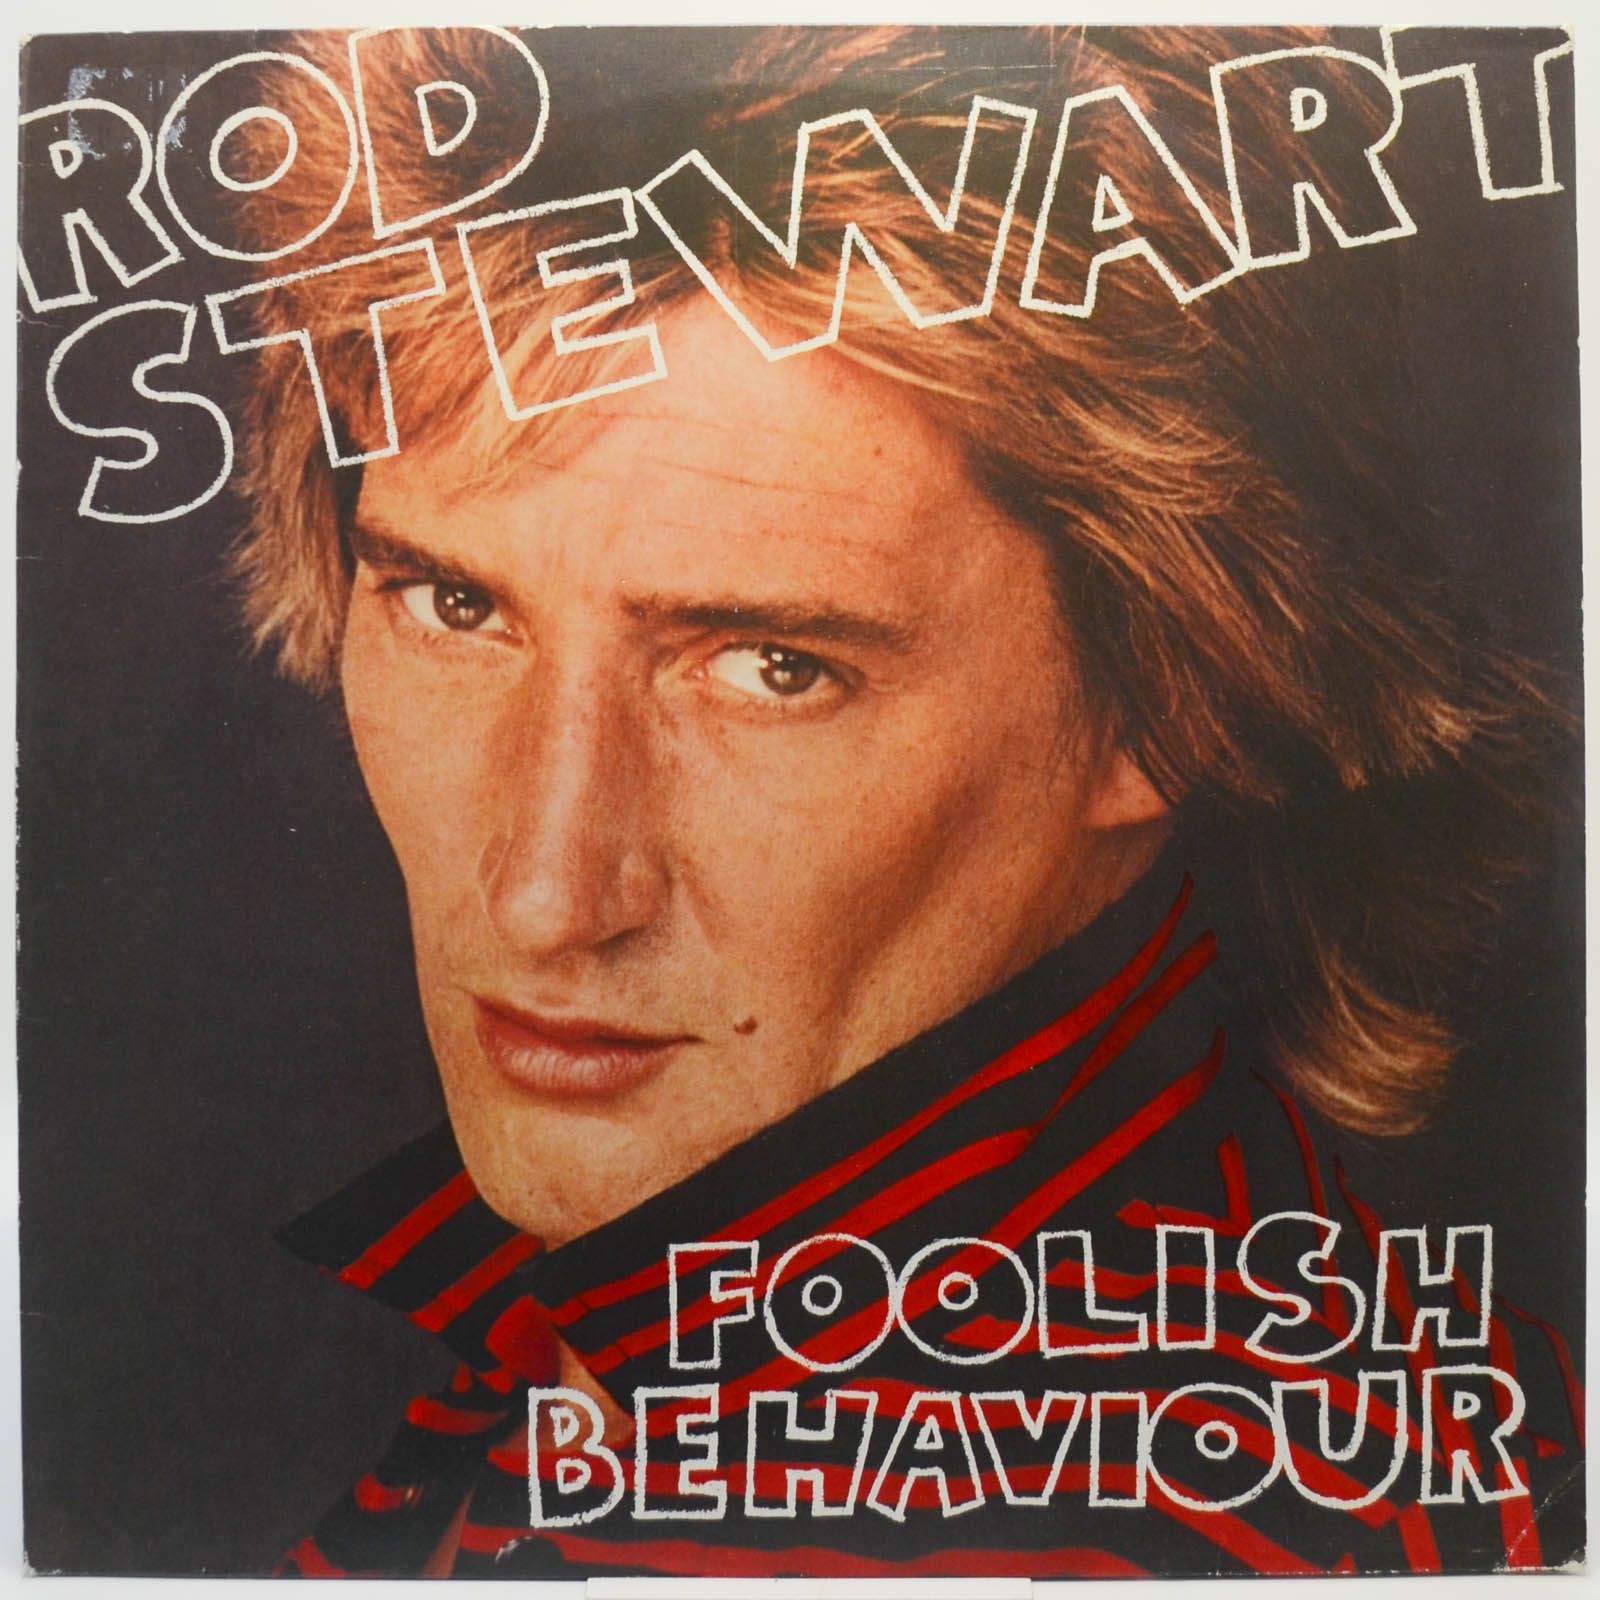 Rod Stewart — Foolish Behaviour, 1980